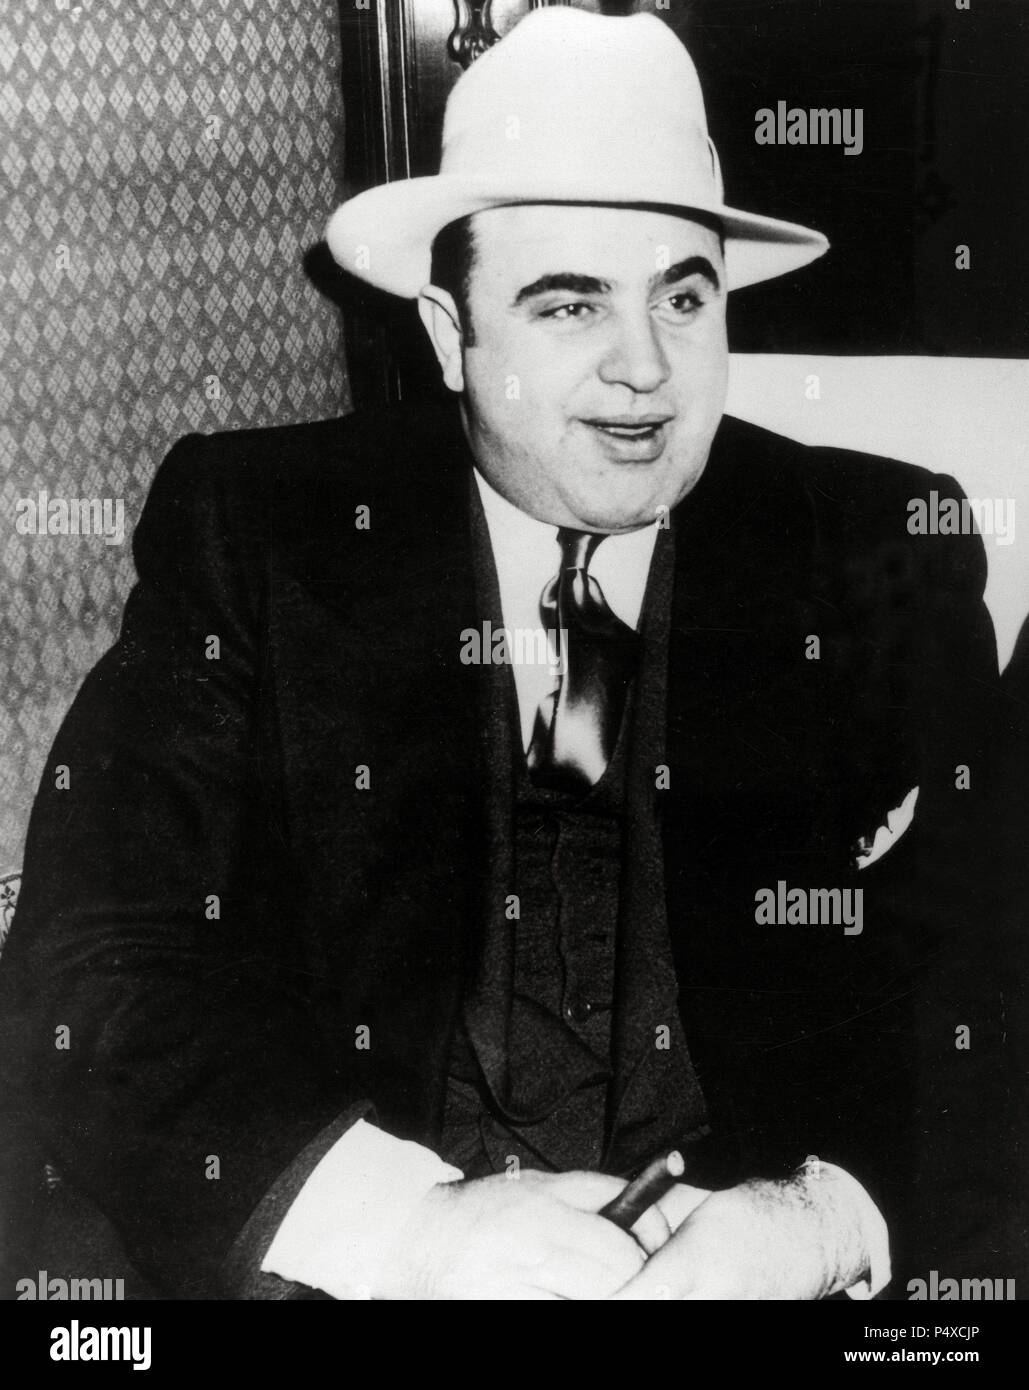 Al Capone en 1947, année de sa mort. Banque D'Images